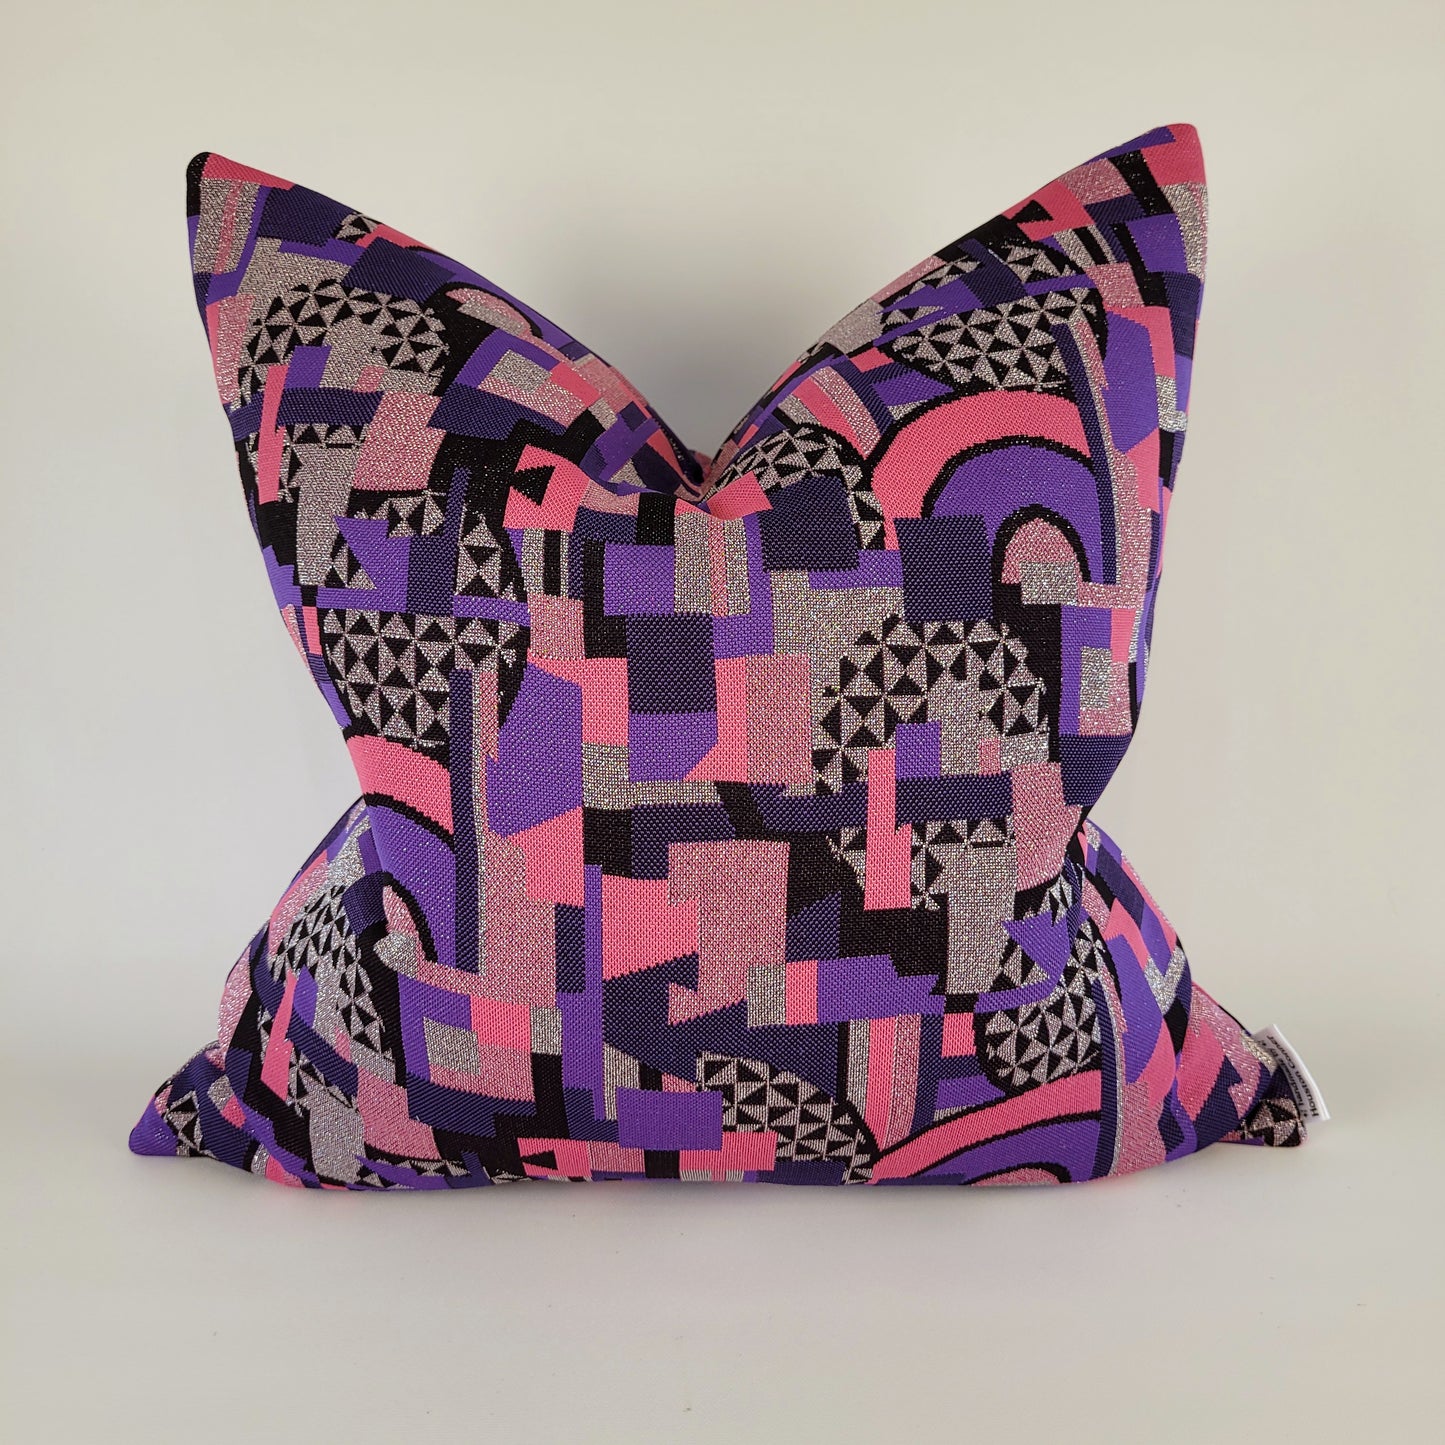 Sparkly Silver, Pink, Purple, Black Geometric Pillows 20"